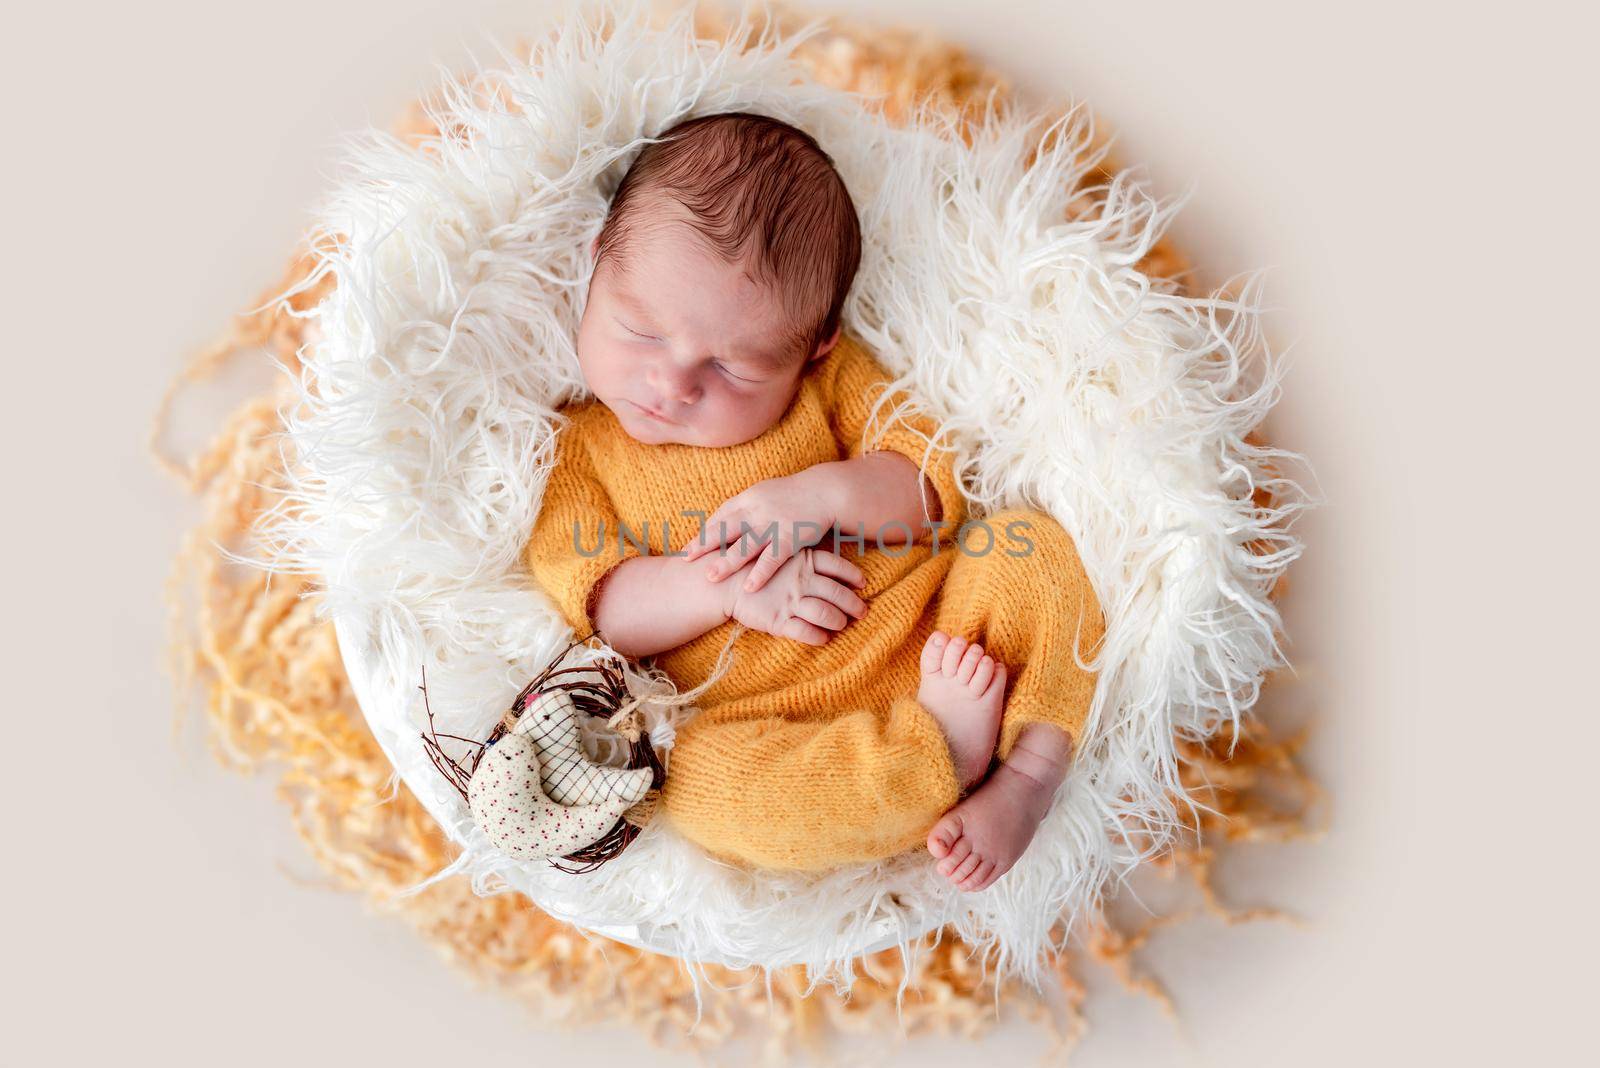 Cute newborn lying in egg cradle by tan4ikk1